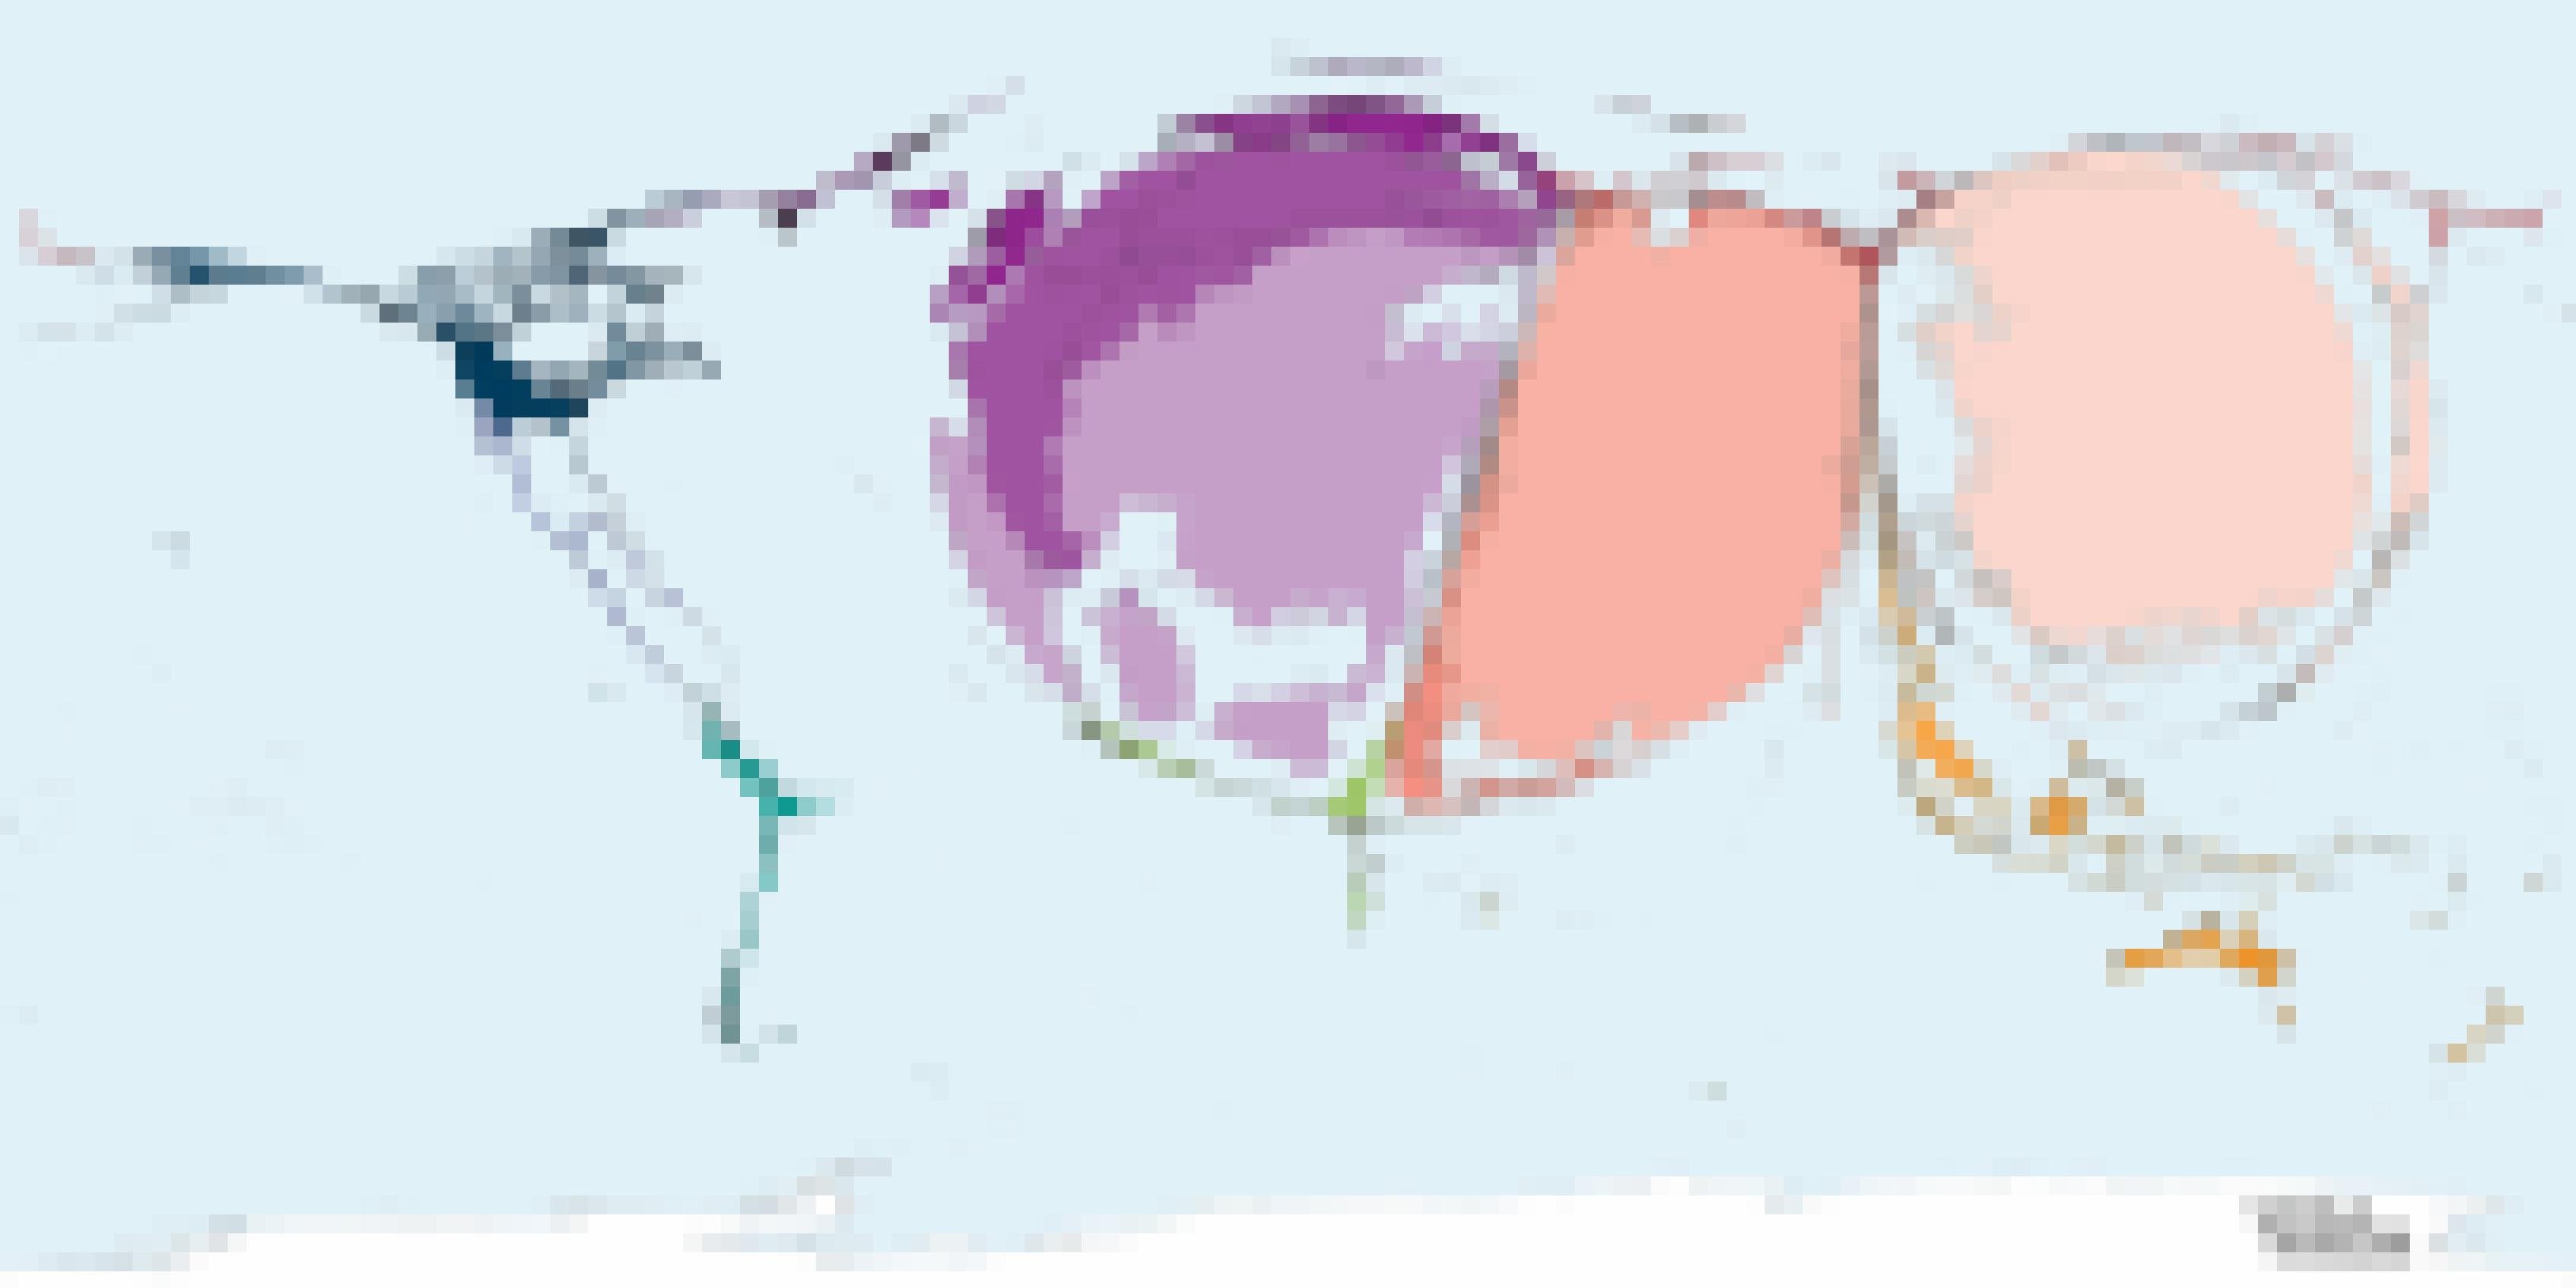 Weltkarte: Coronavirus (Covid-19) Fälle außerhalb Chinas